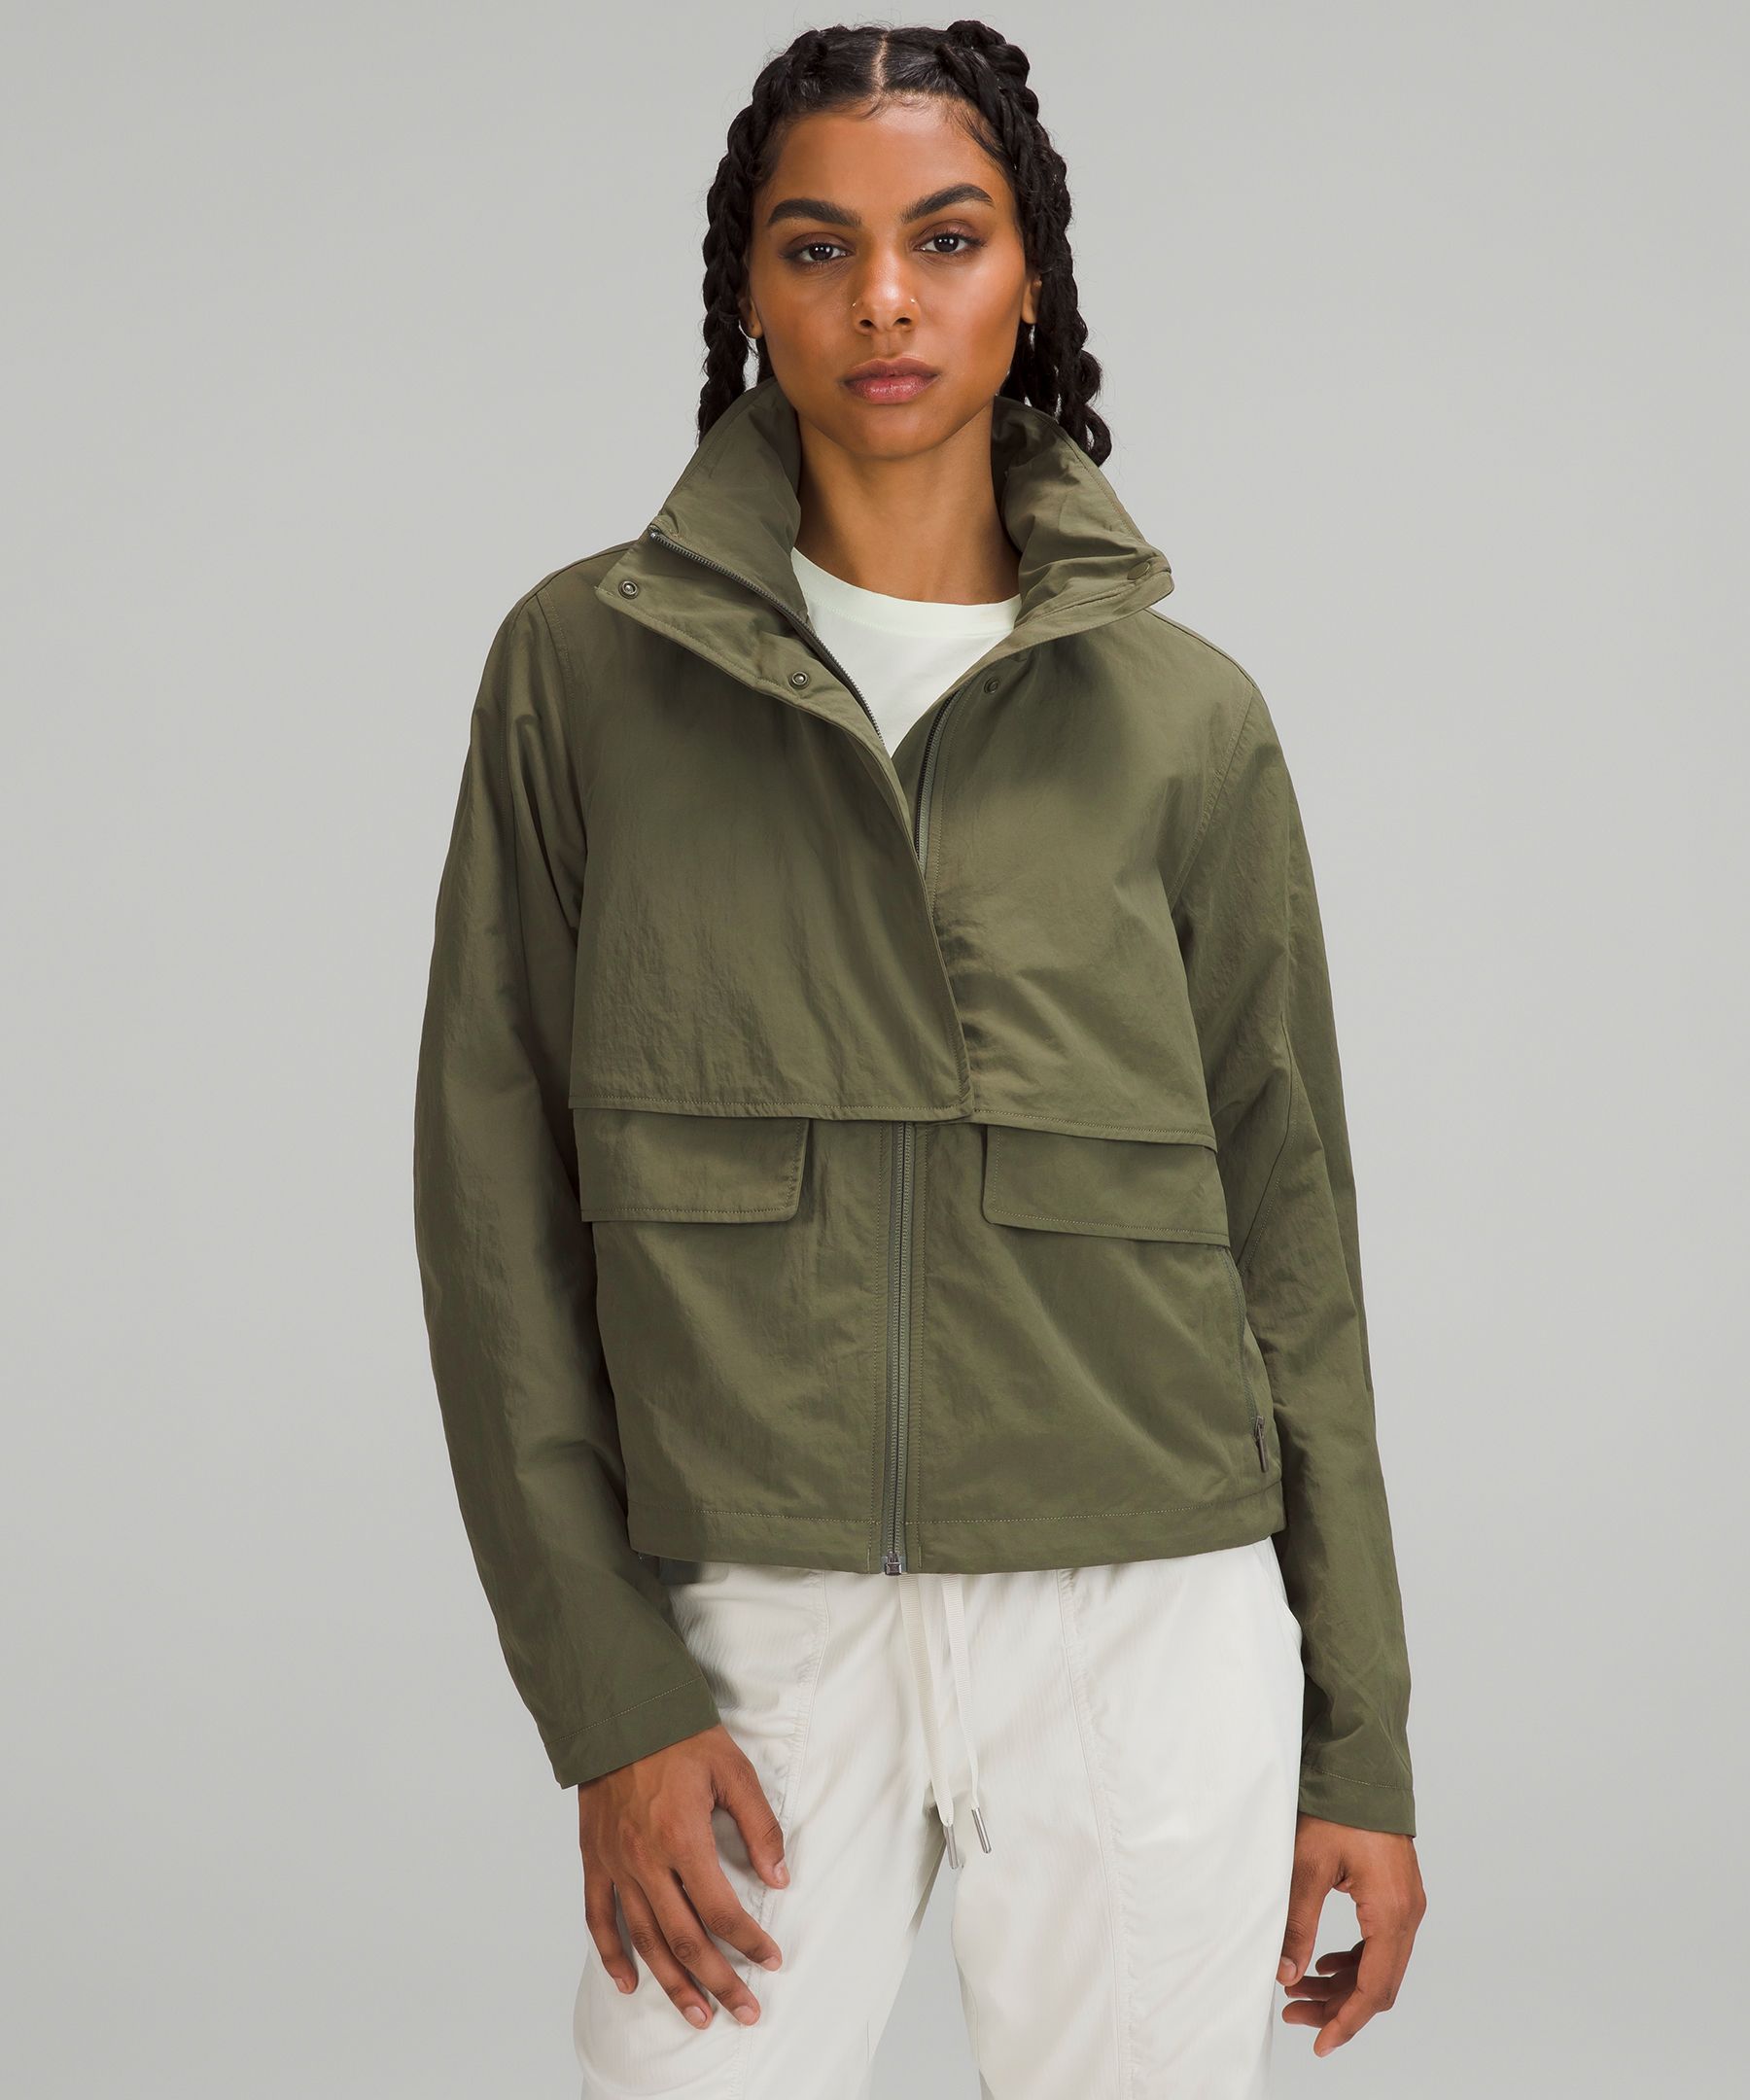 lululemon effortless jacket size 4